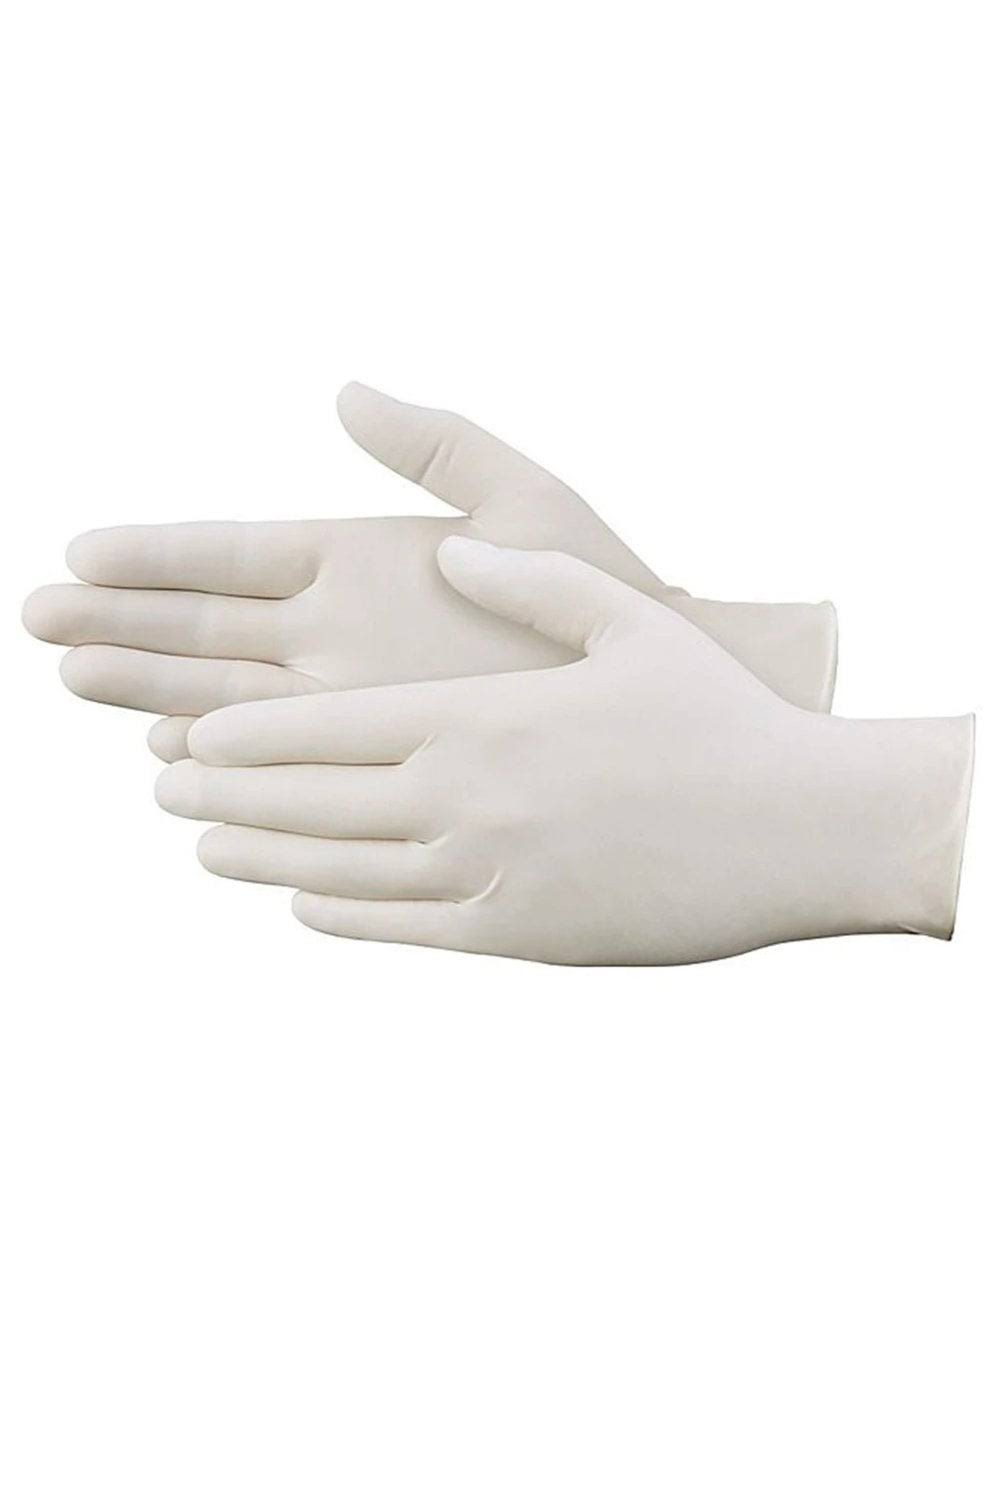 Top Glove Latex Powder Free Medium 100 Pack